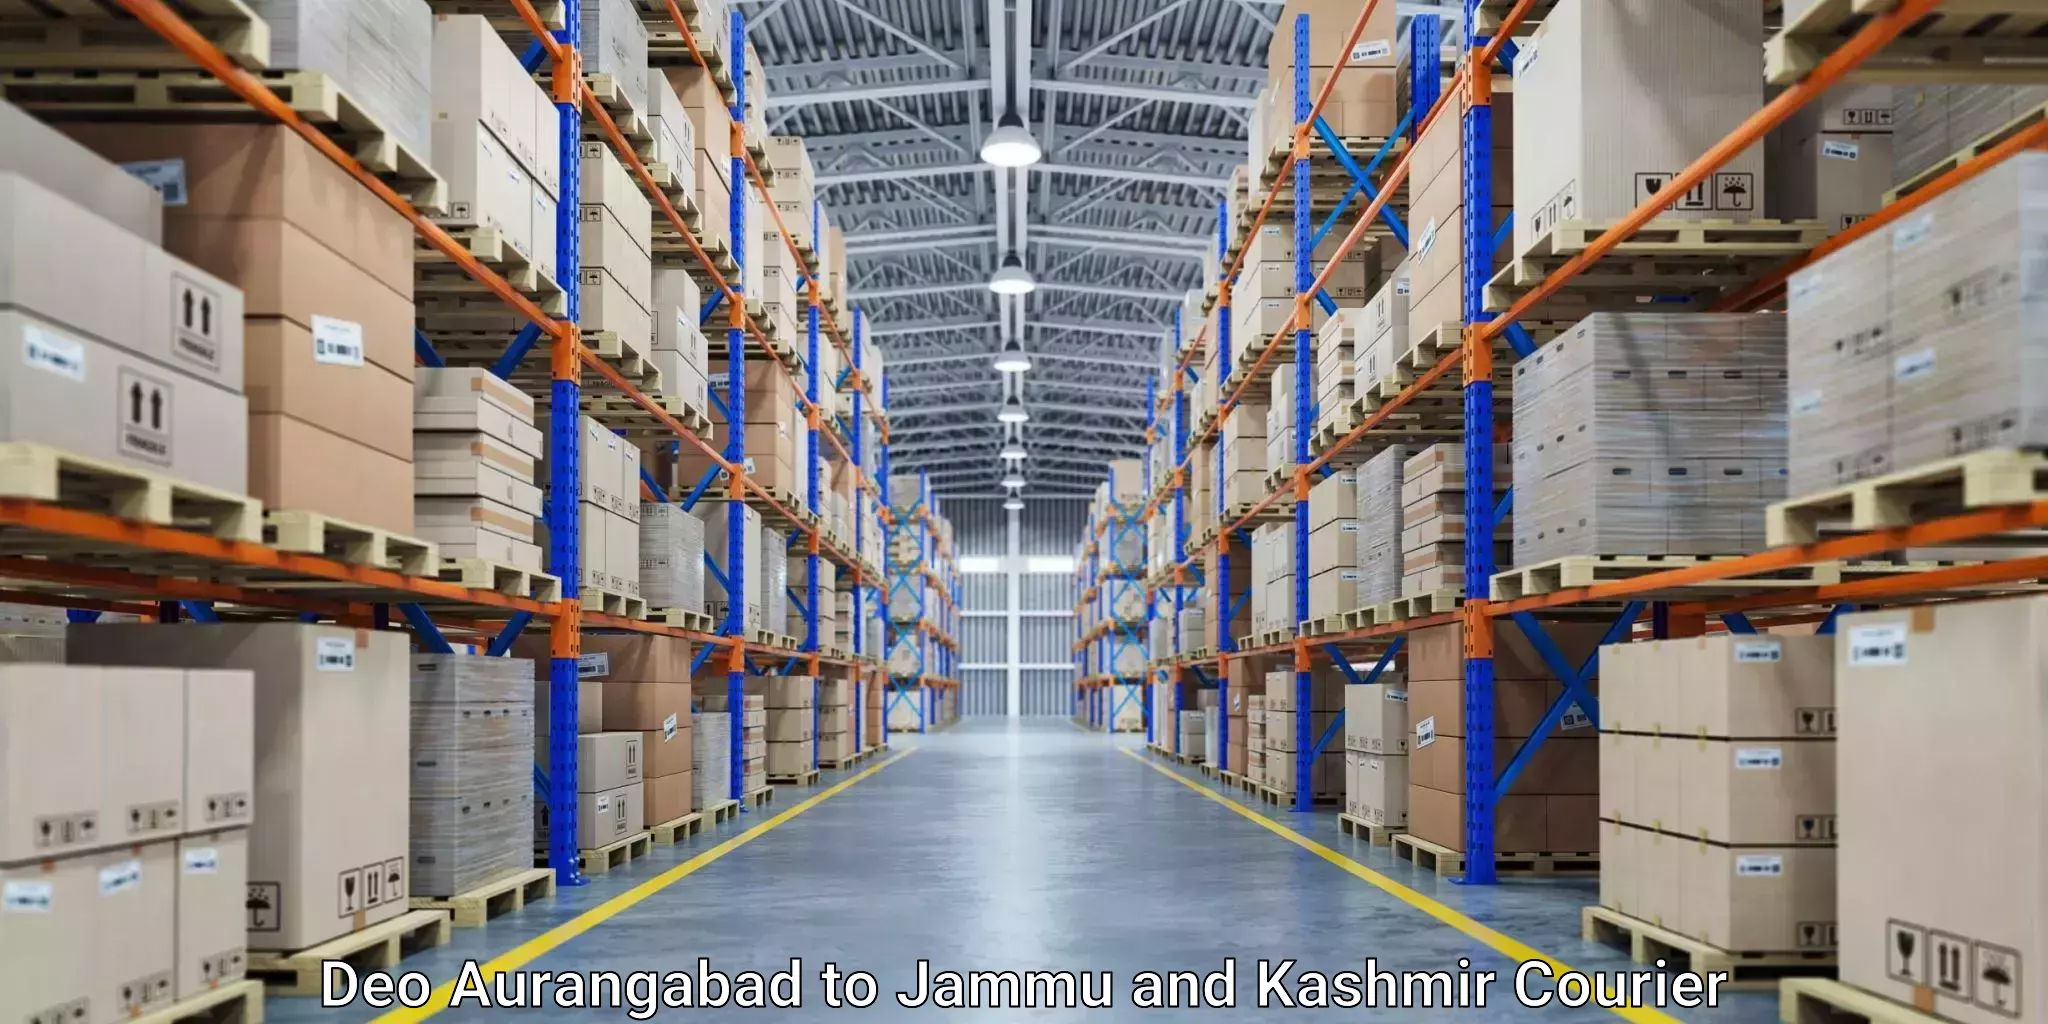 Courier service innovation Deo Aurangabad to Jammu and Kashmir